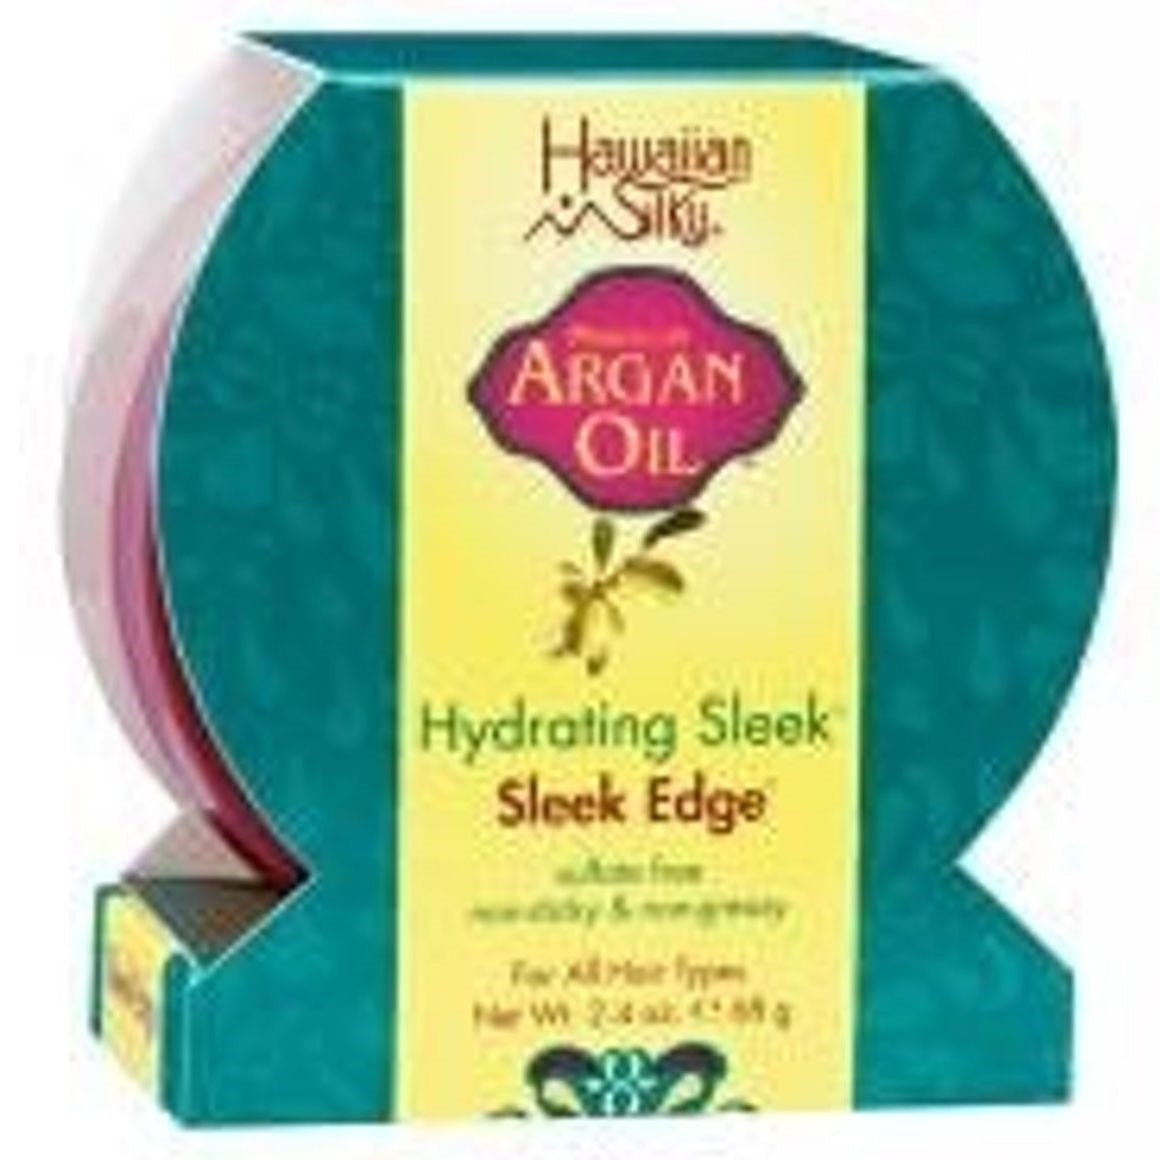 Hawaiian Silky Argan Oil Hydrating Sleek Edge 68 Gr